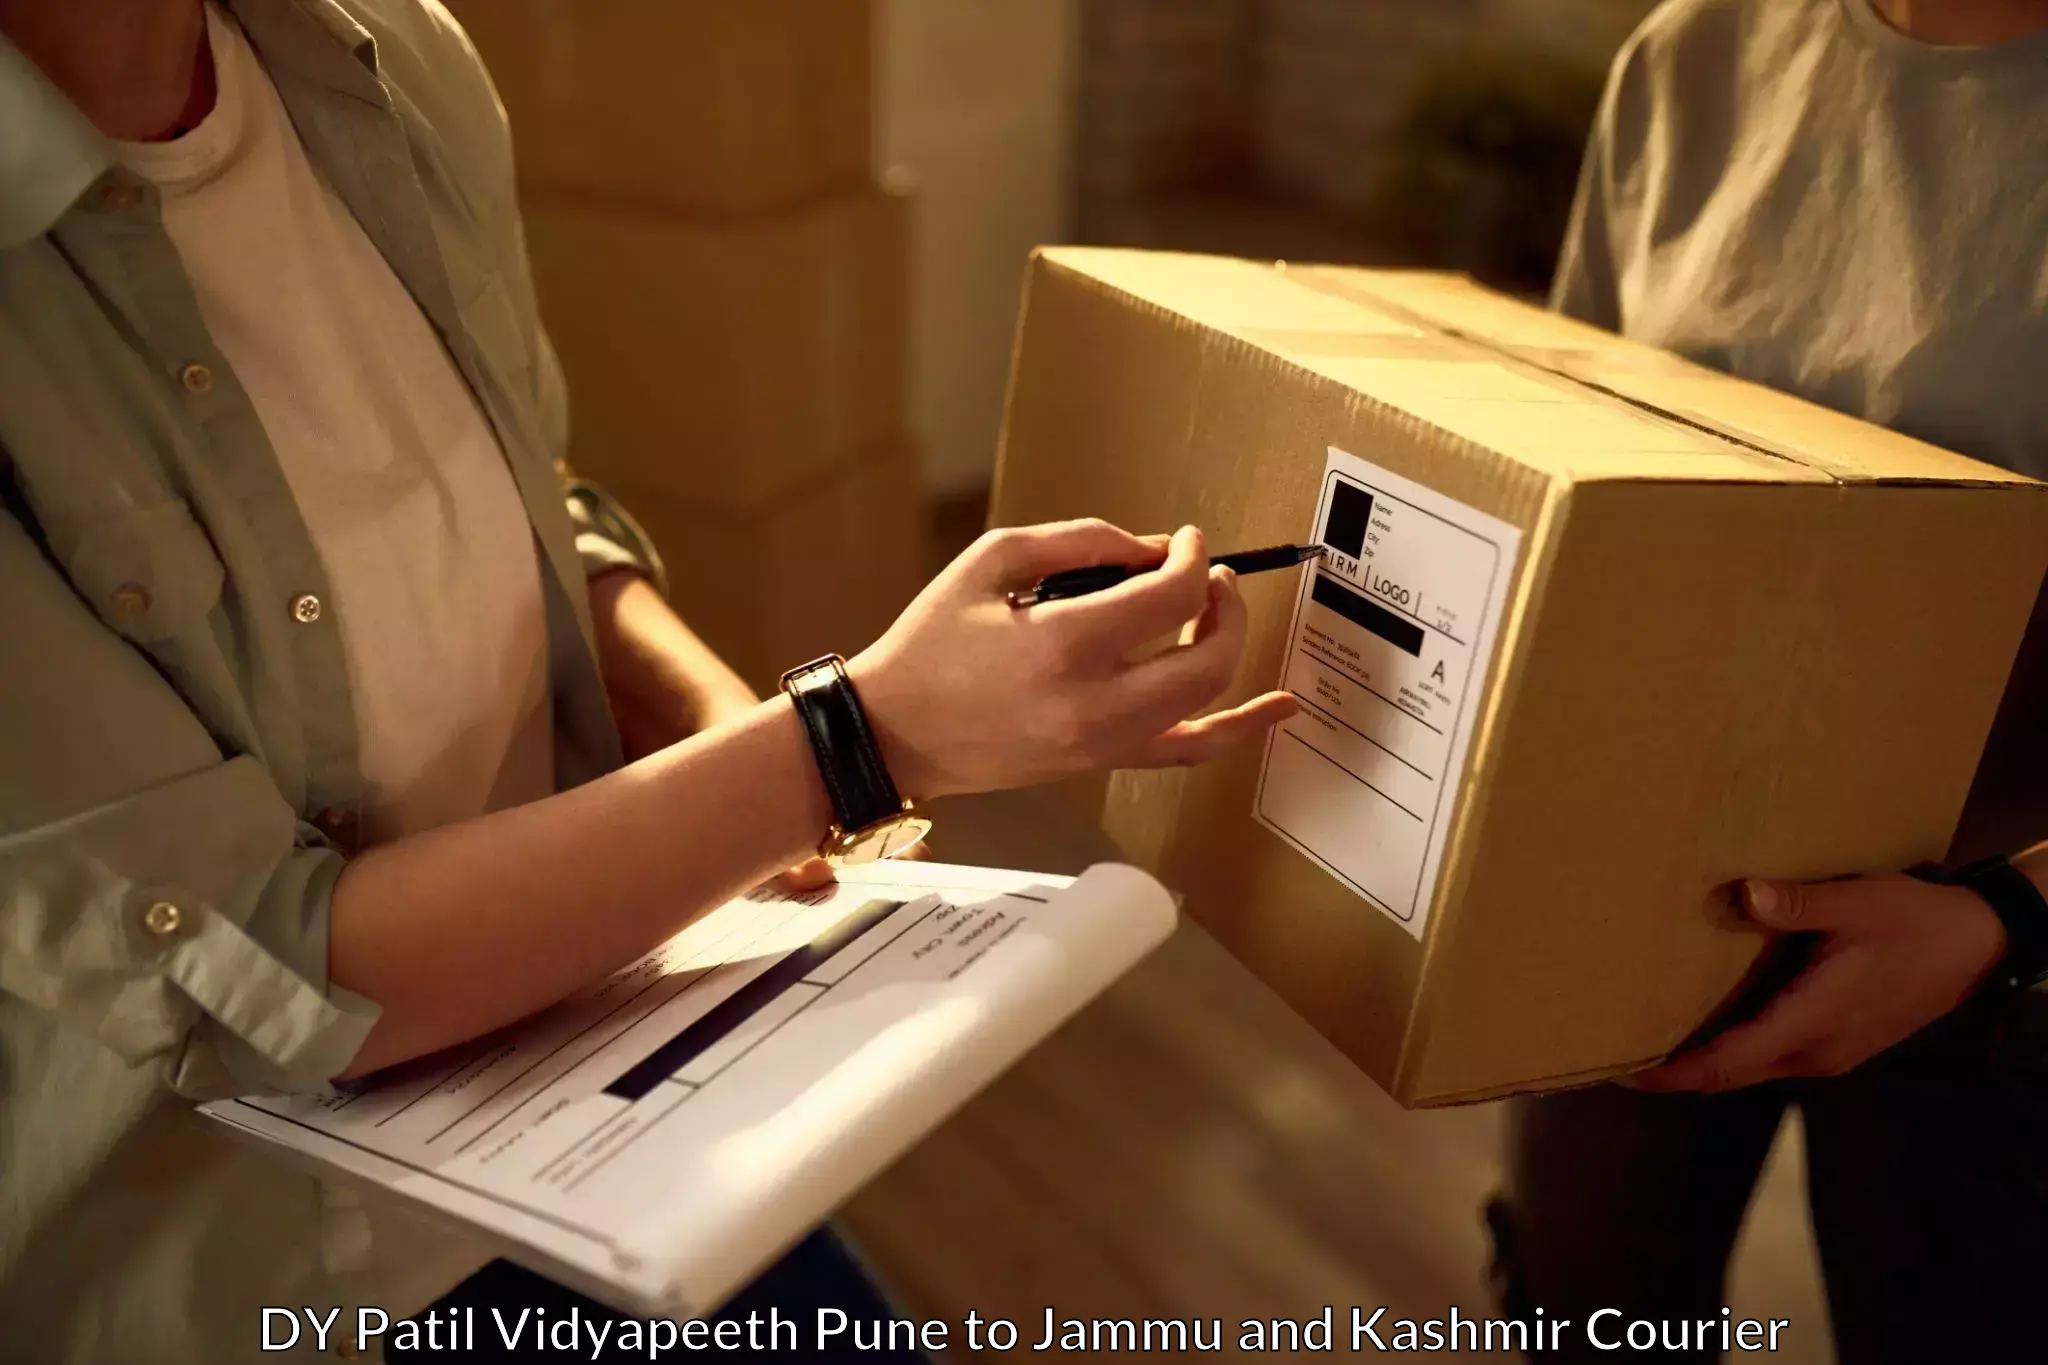 Online shipping calculator in DY Patil Vidyapeeth Pune to Srinagar Kashmir